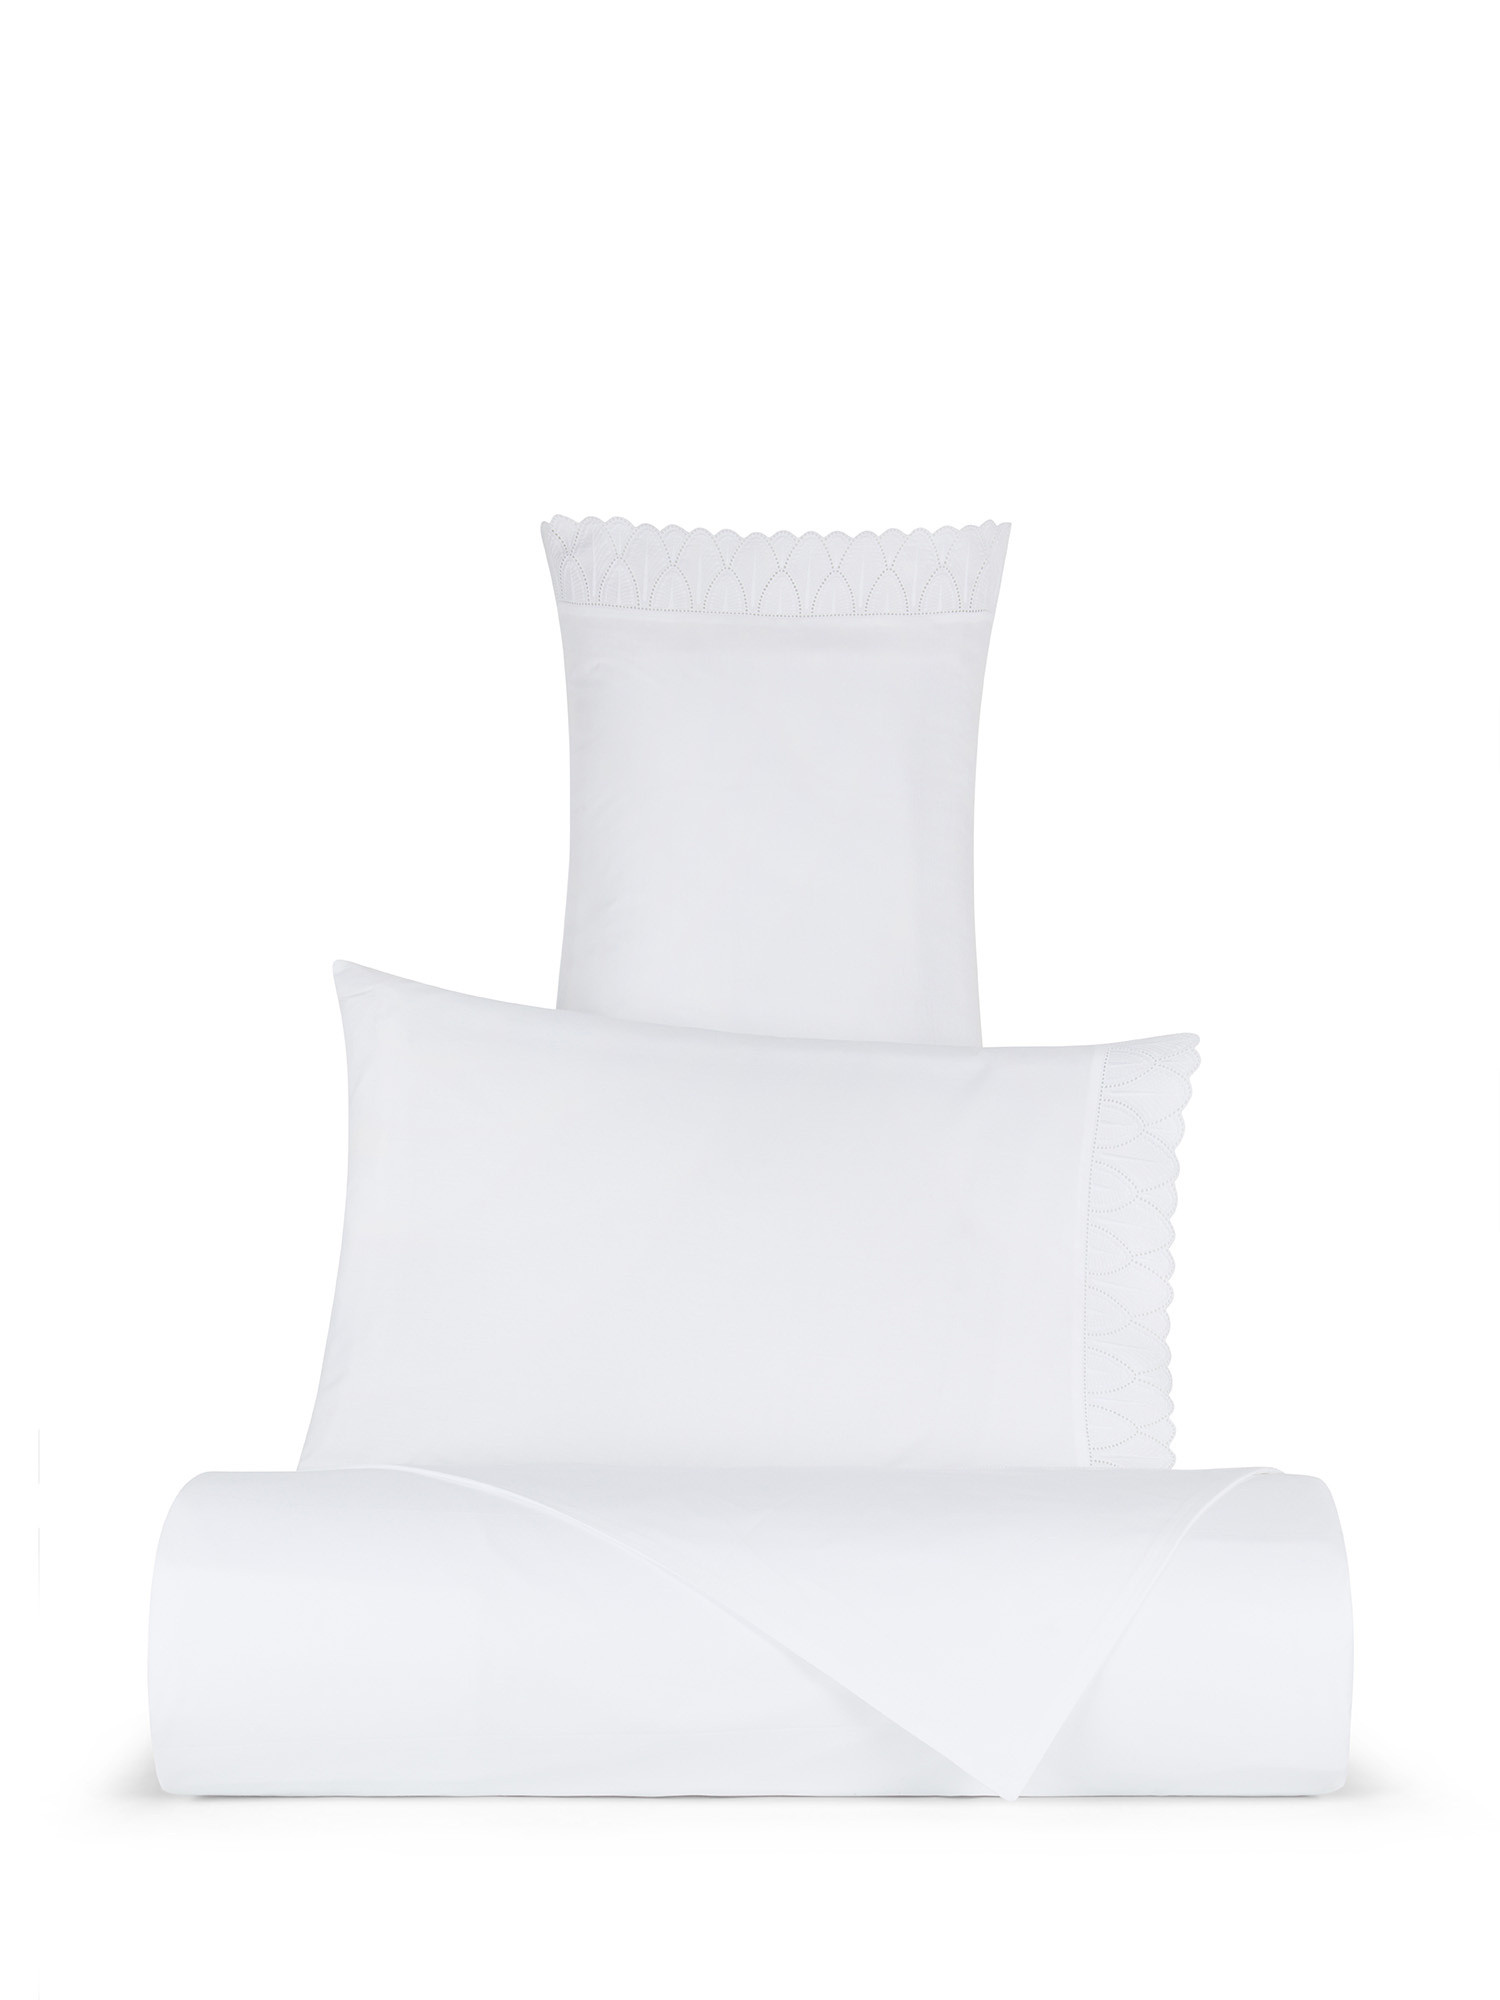 Duvet cover in fine cotton percale Portofino, White, large image number 0